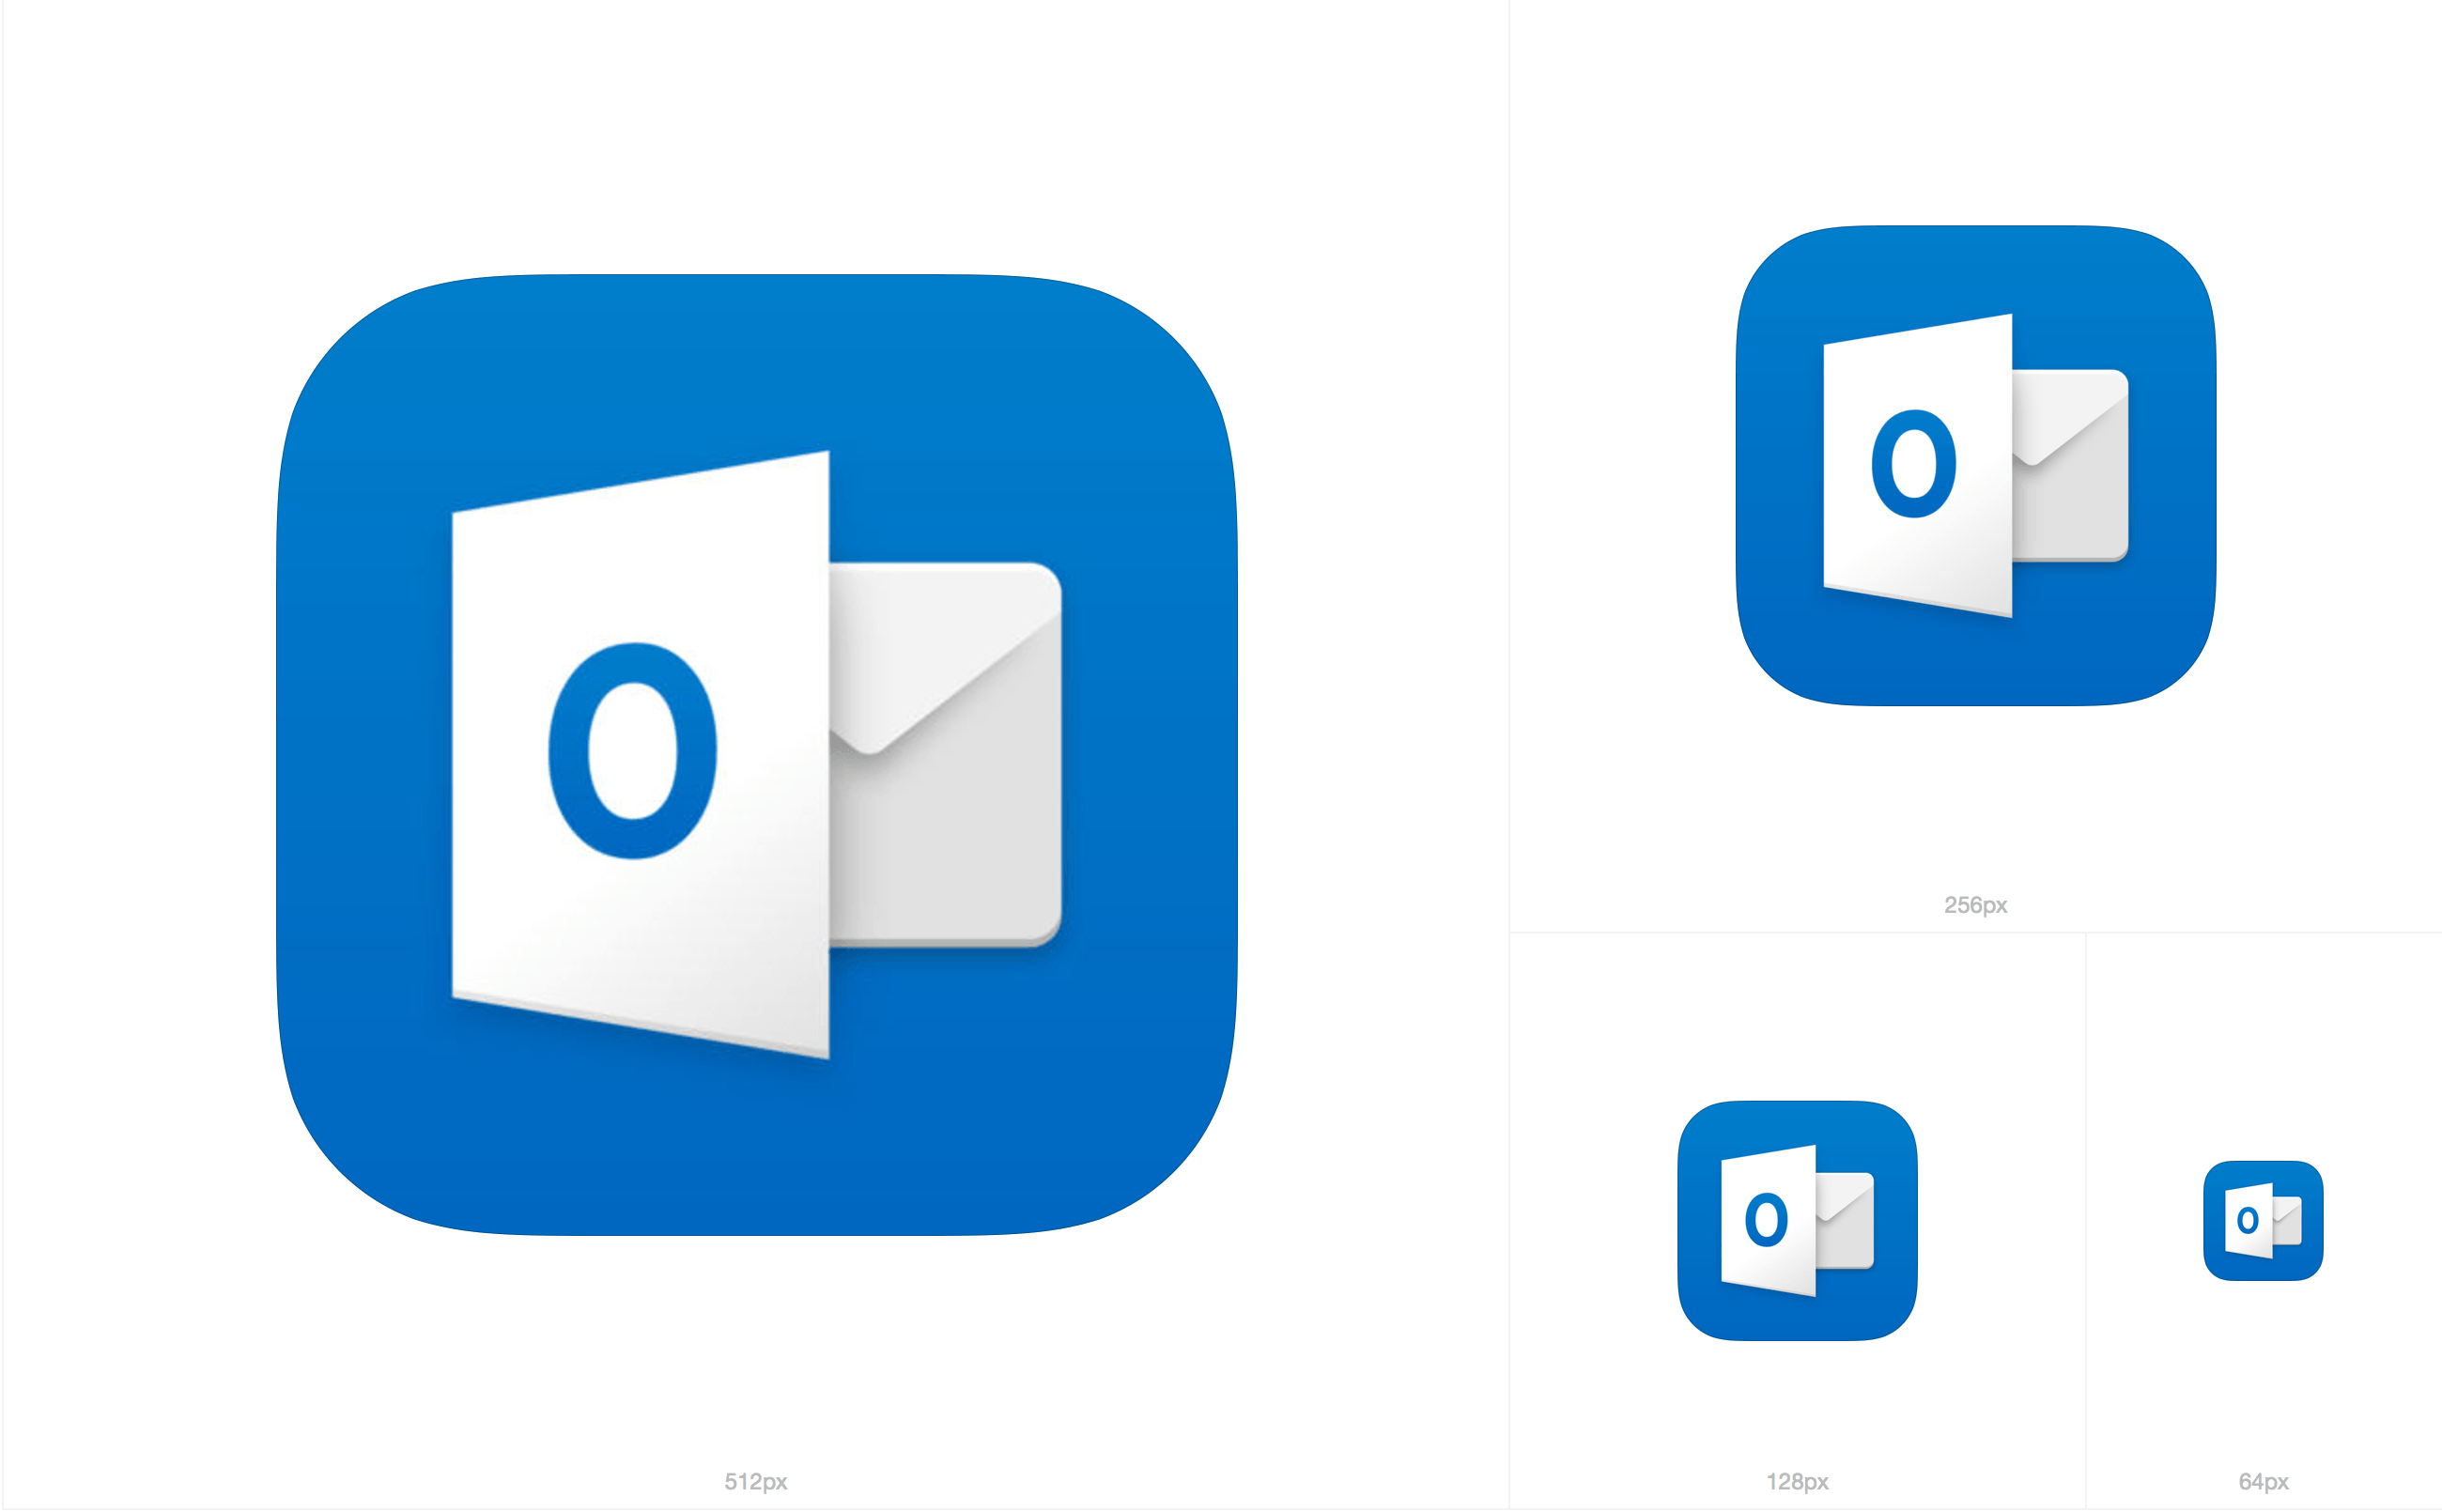 Outlook App Logo - Microsoft Outlook App Icon | Icons | App icon, App, Microsoft